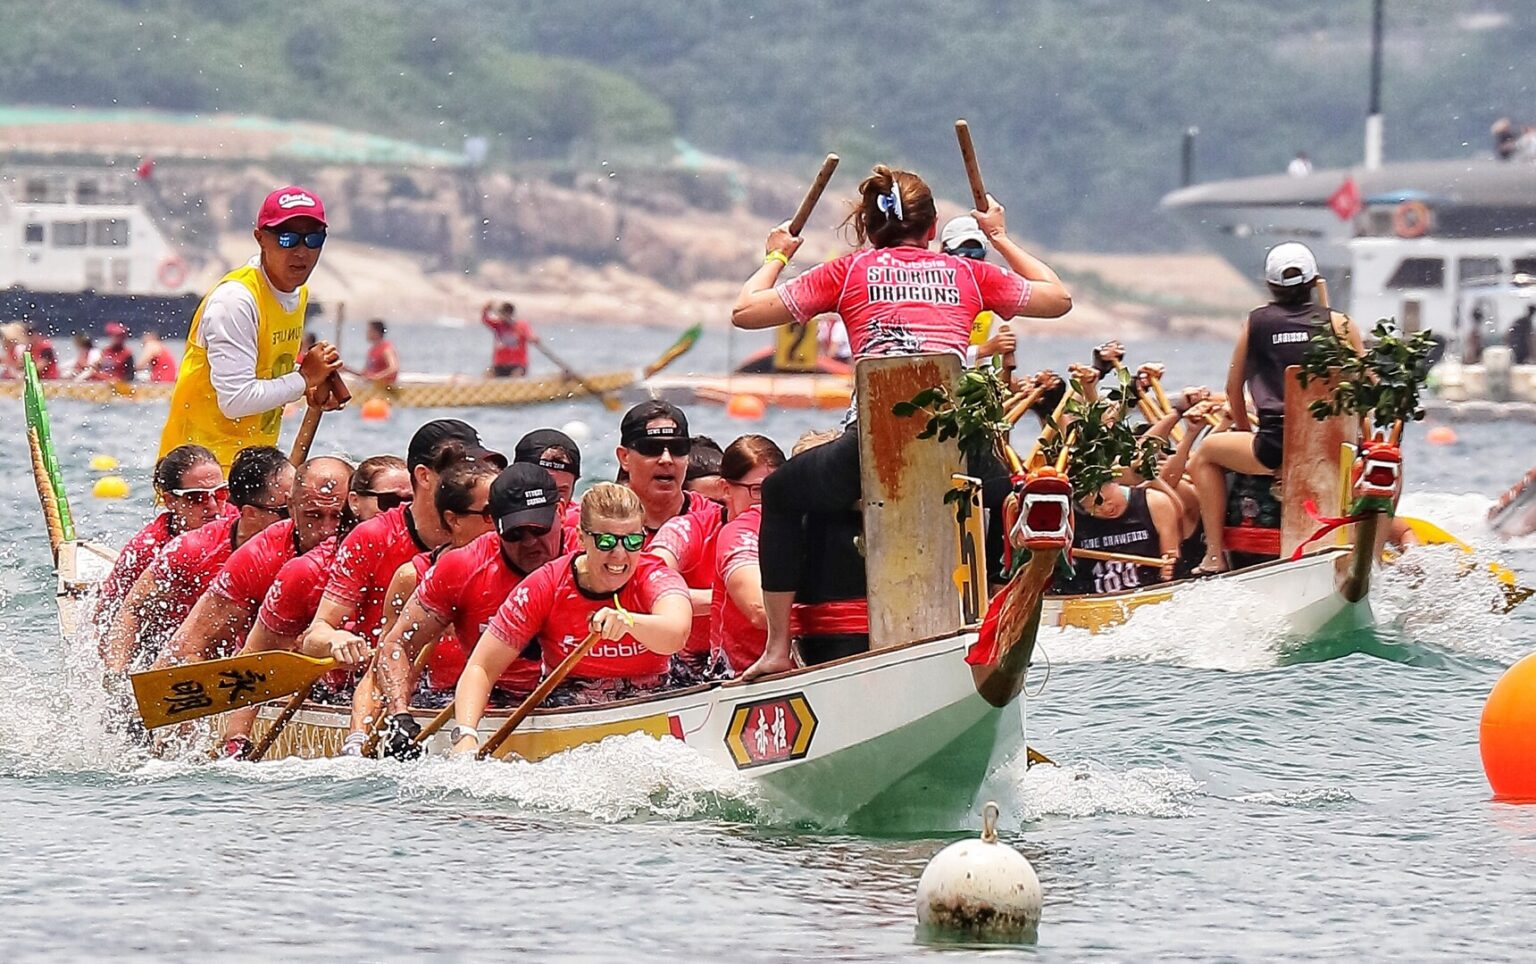 Hong Kong International Dragon Boat Races return after 4-year hiatus